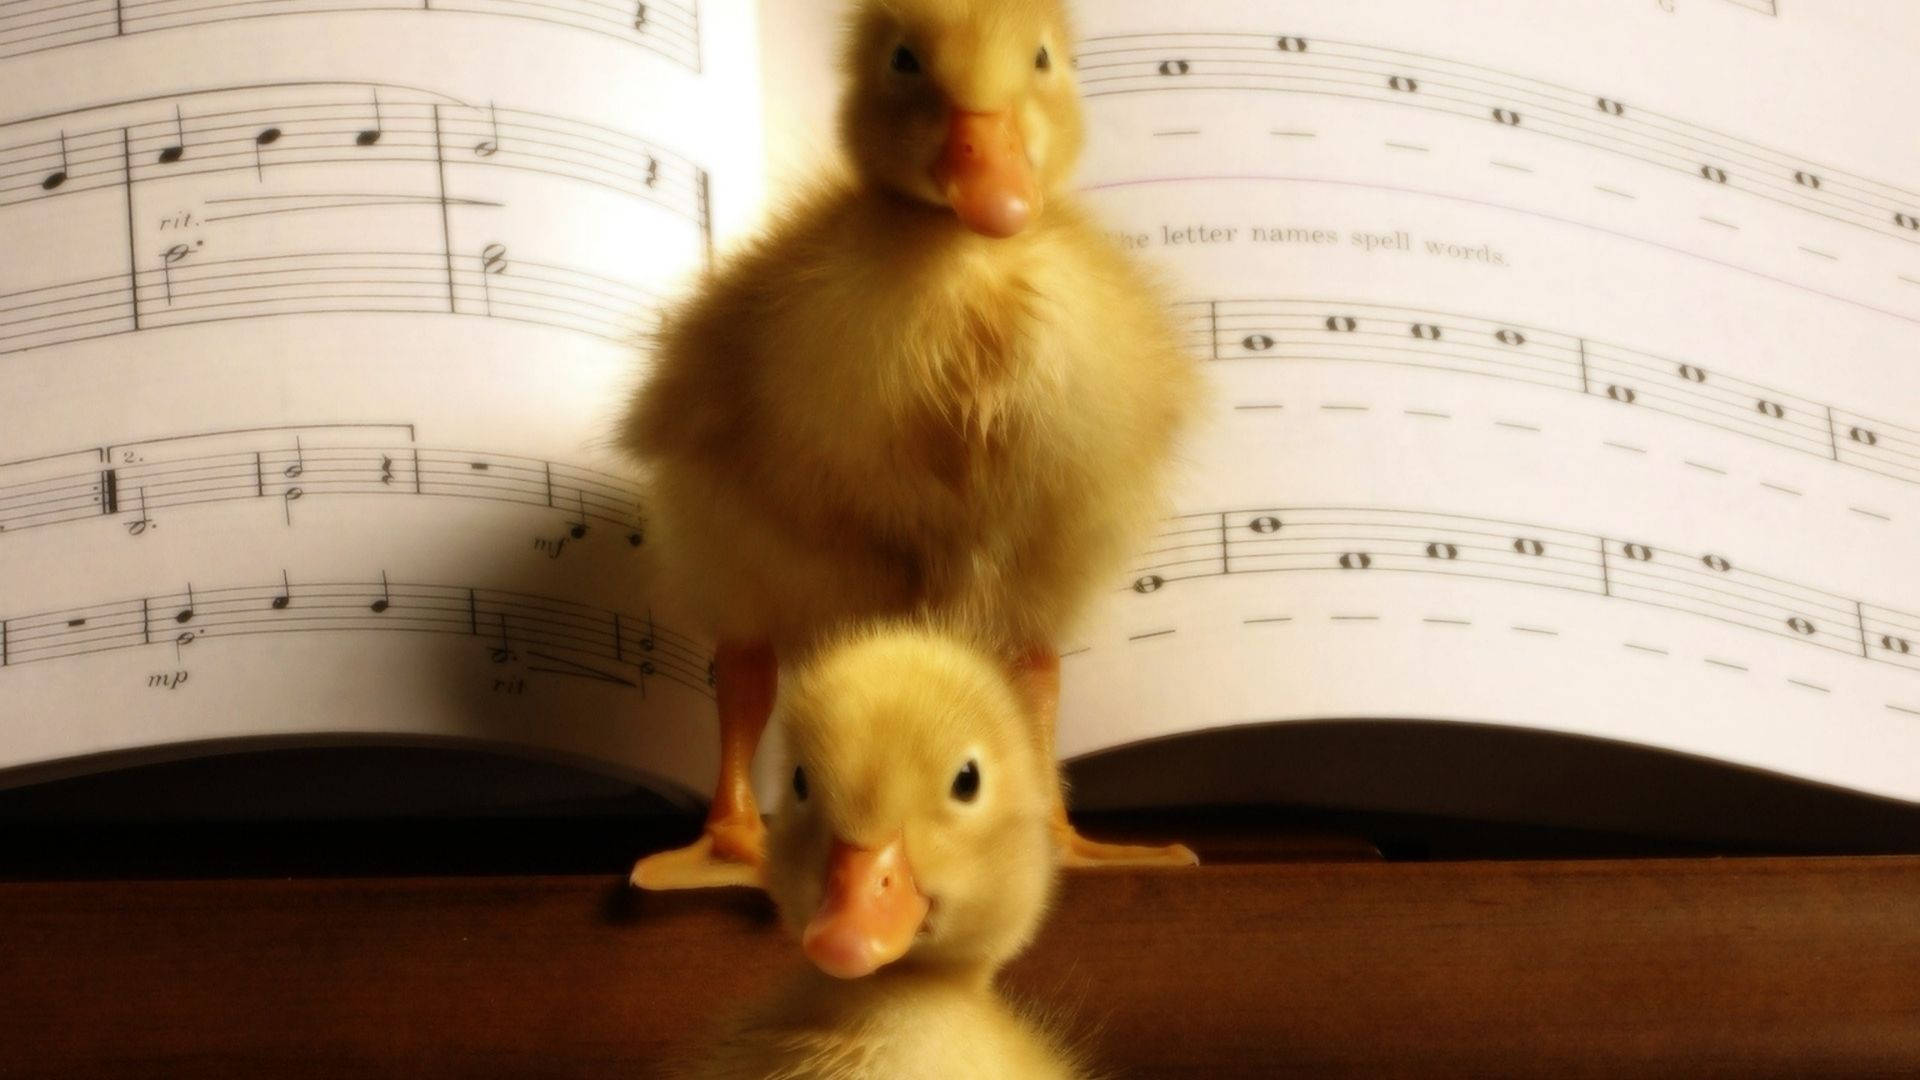 Baby Ducks Musical Background